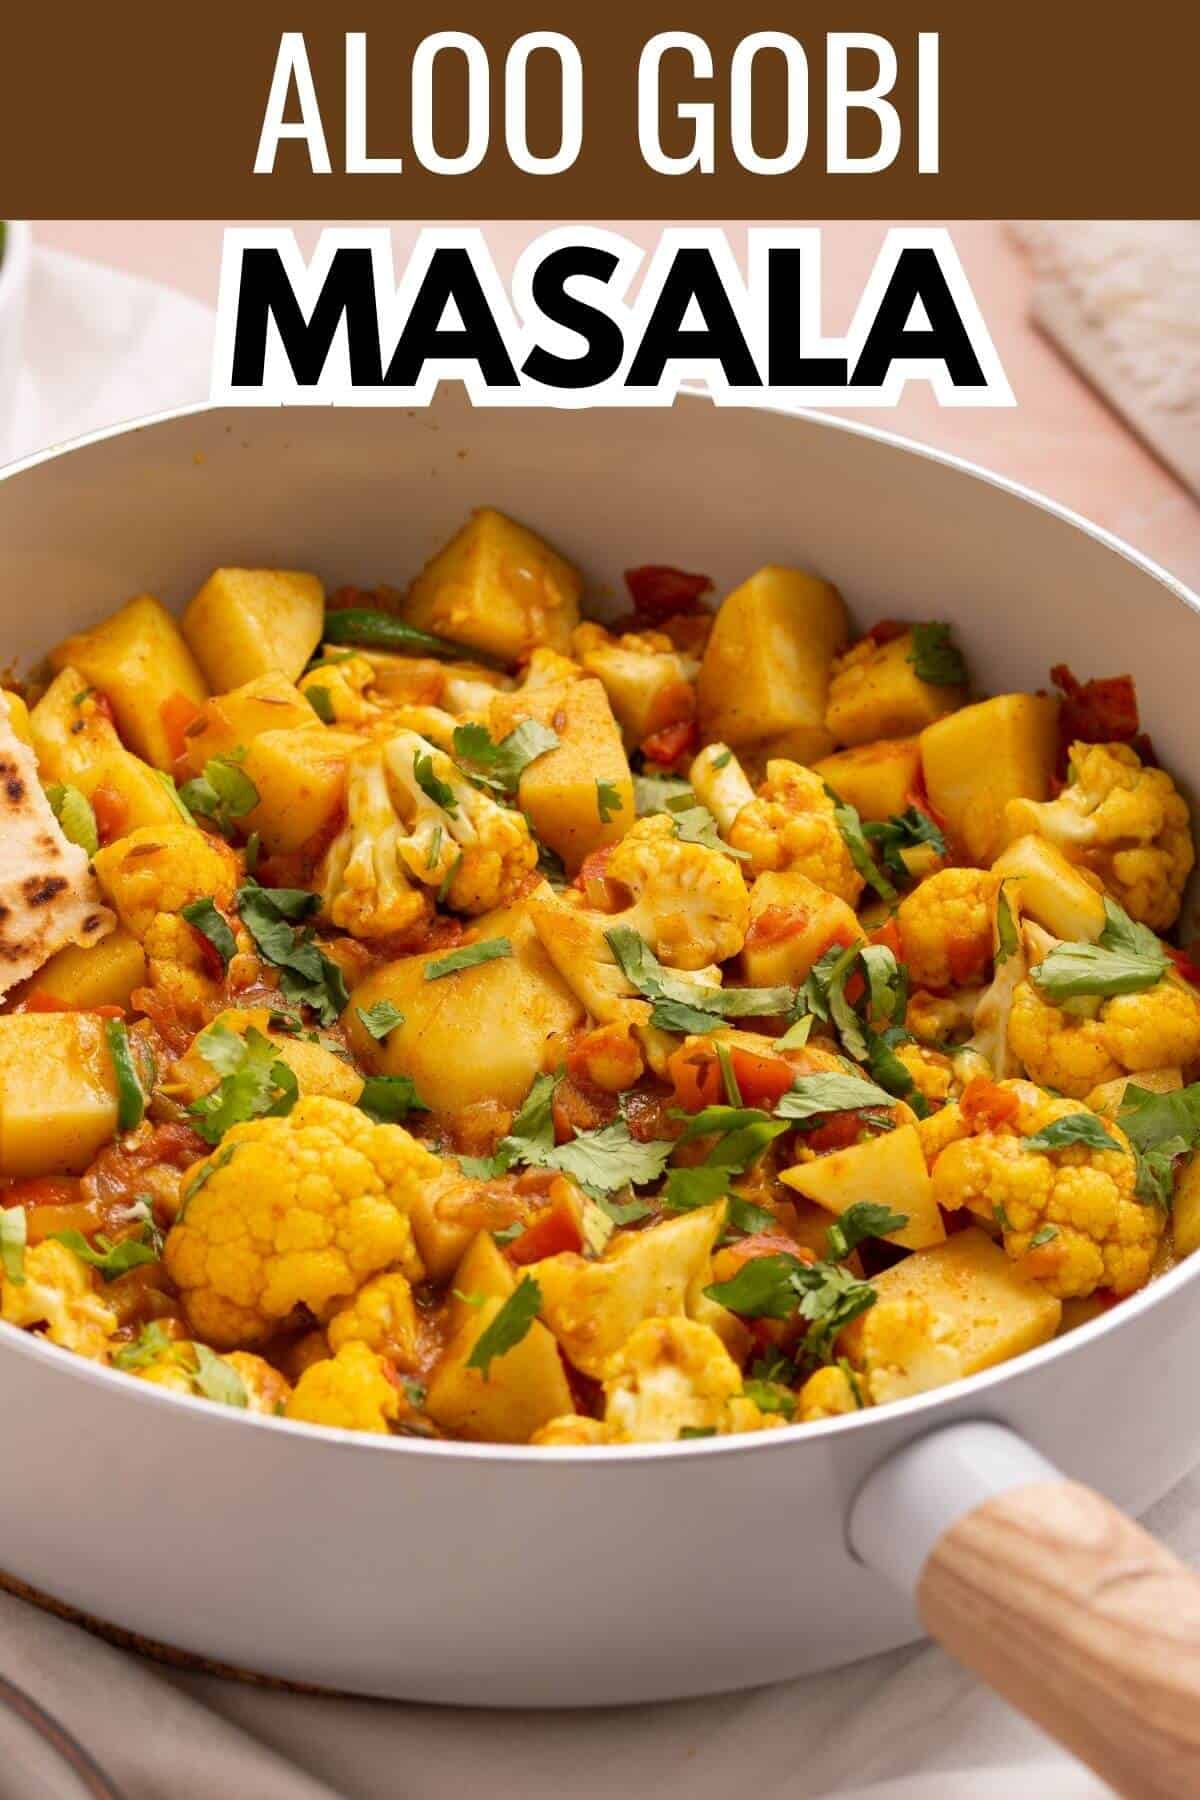 Aloo gobi masala with recipe title text.